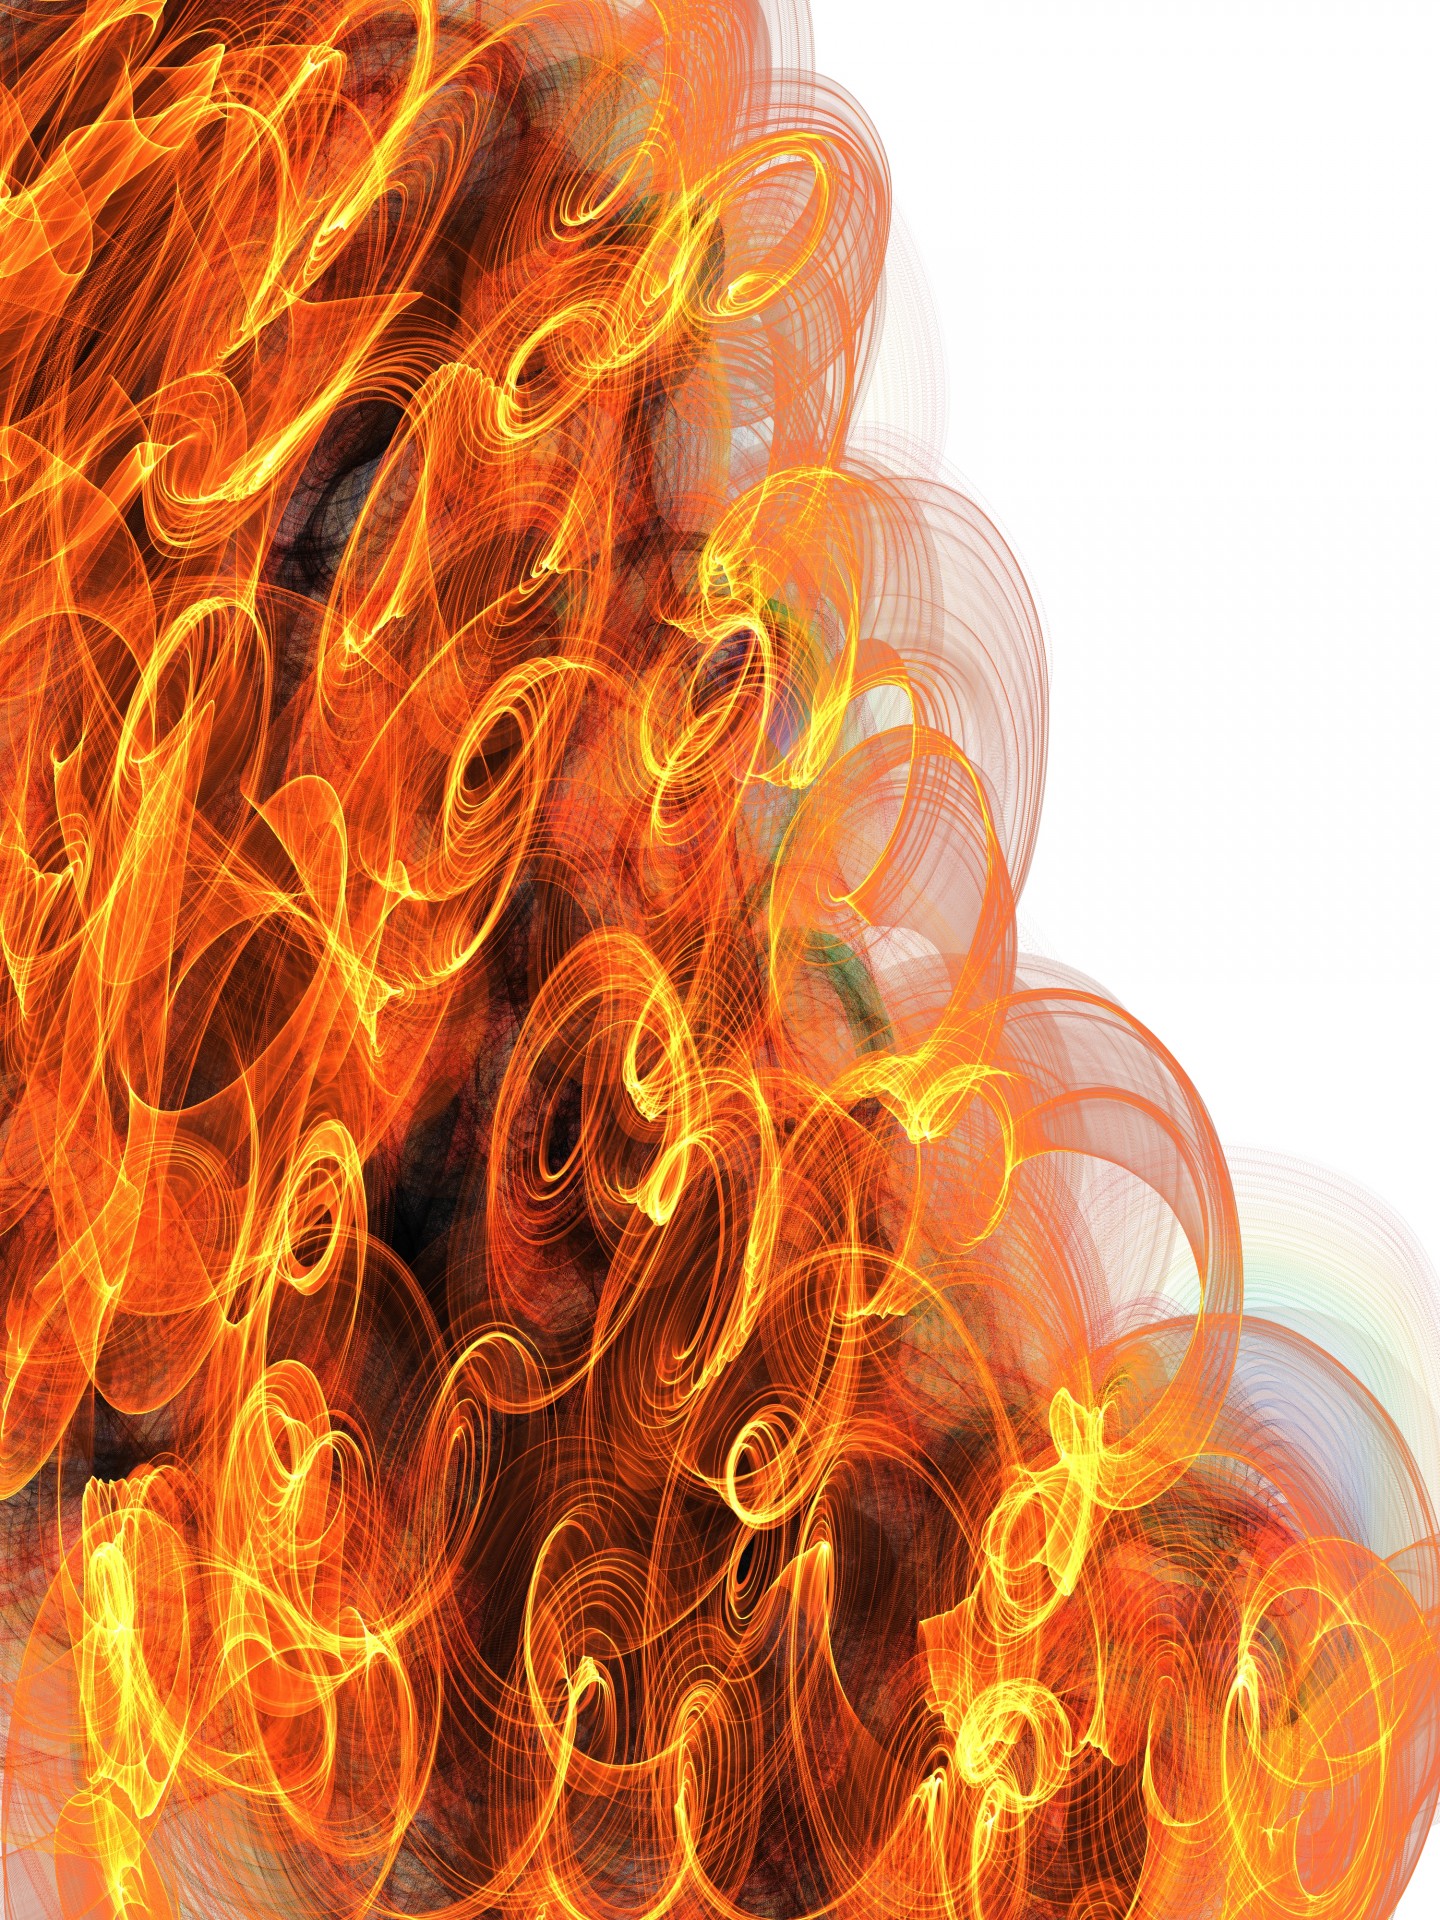 Fire graphic. Оранжевый огонь. Текстура огня. Оранжевый огонь на белом фоне. Фон абстракция огонь оранжевый.